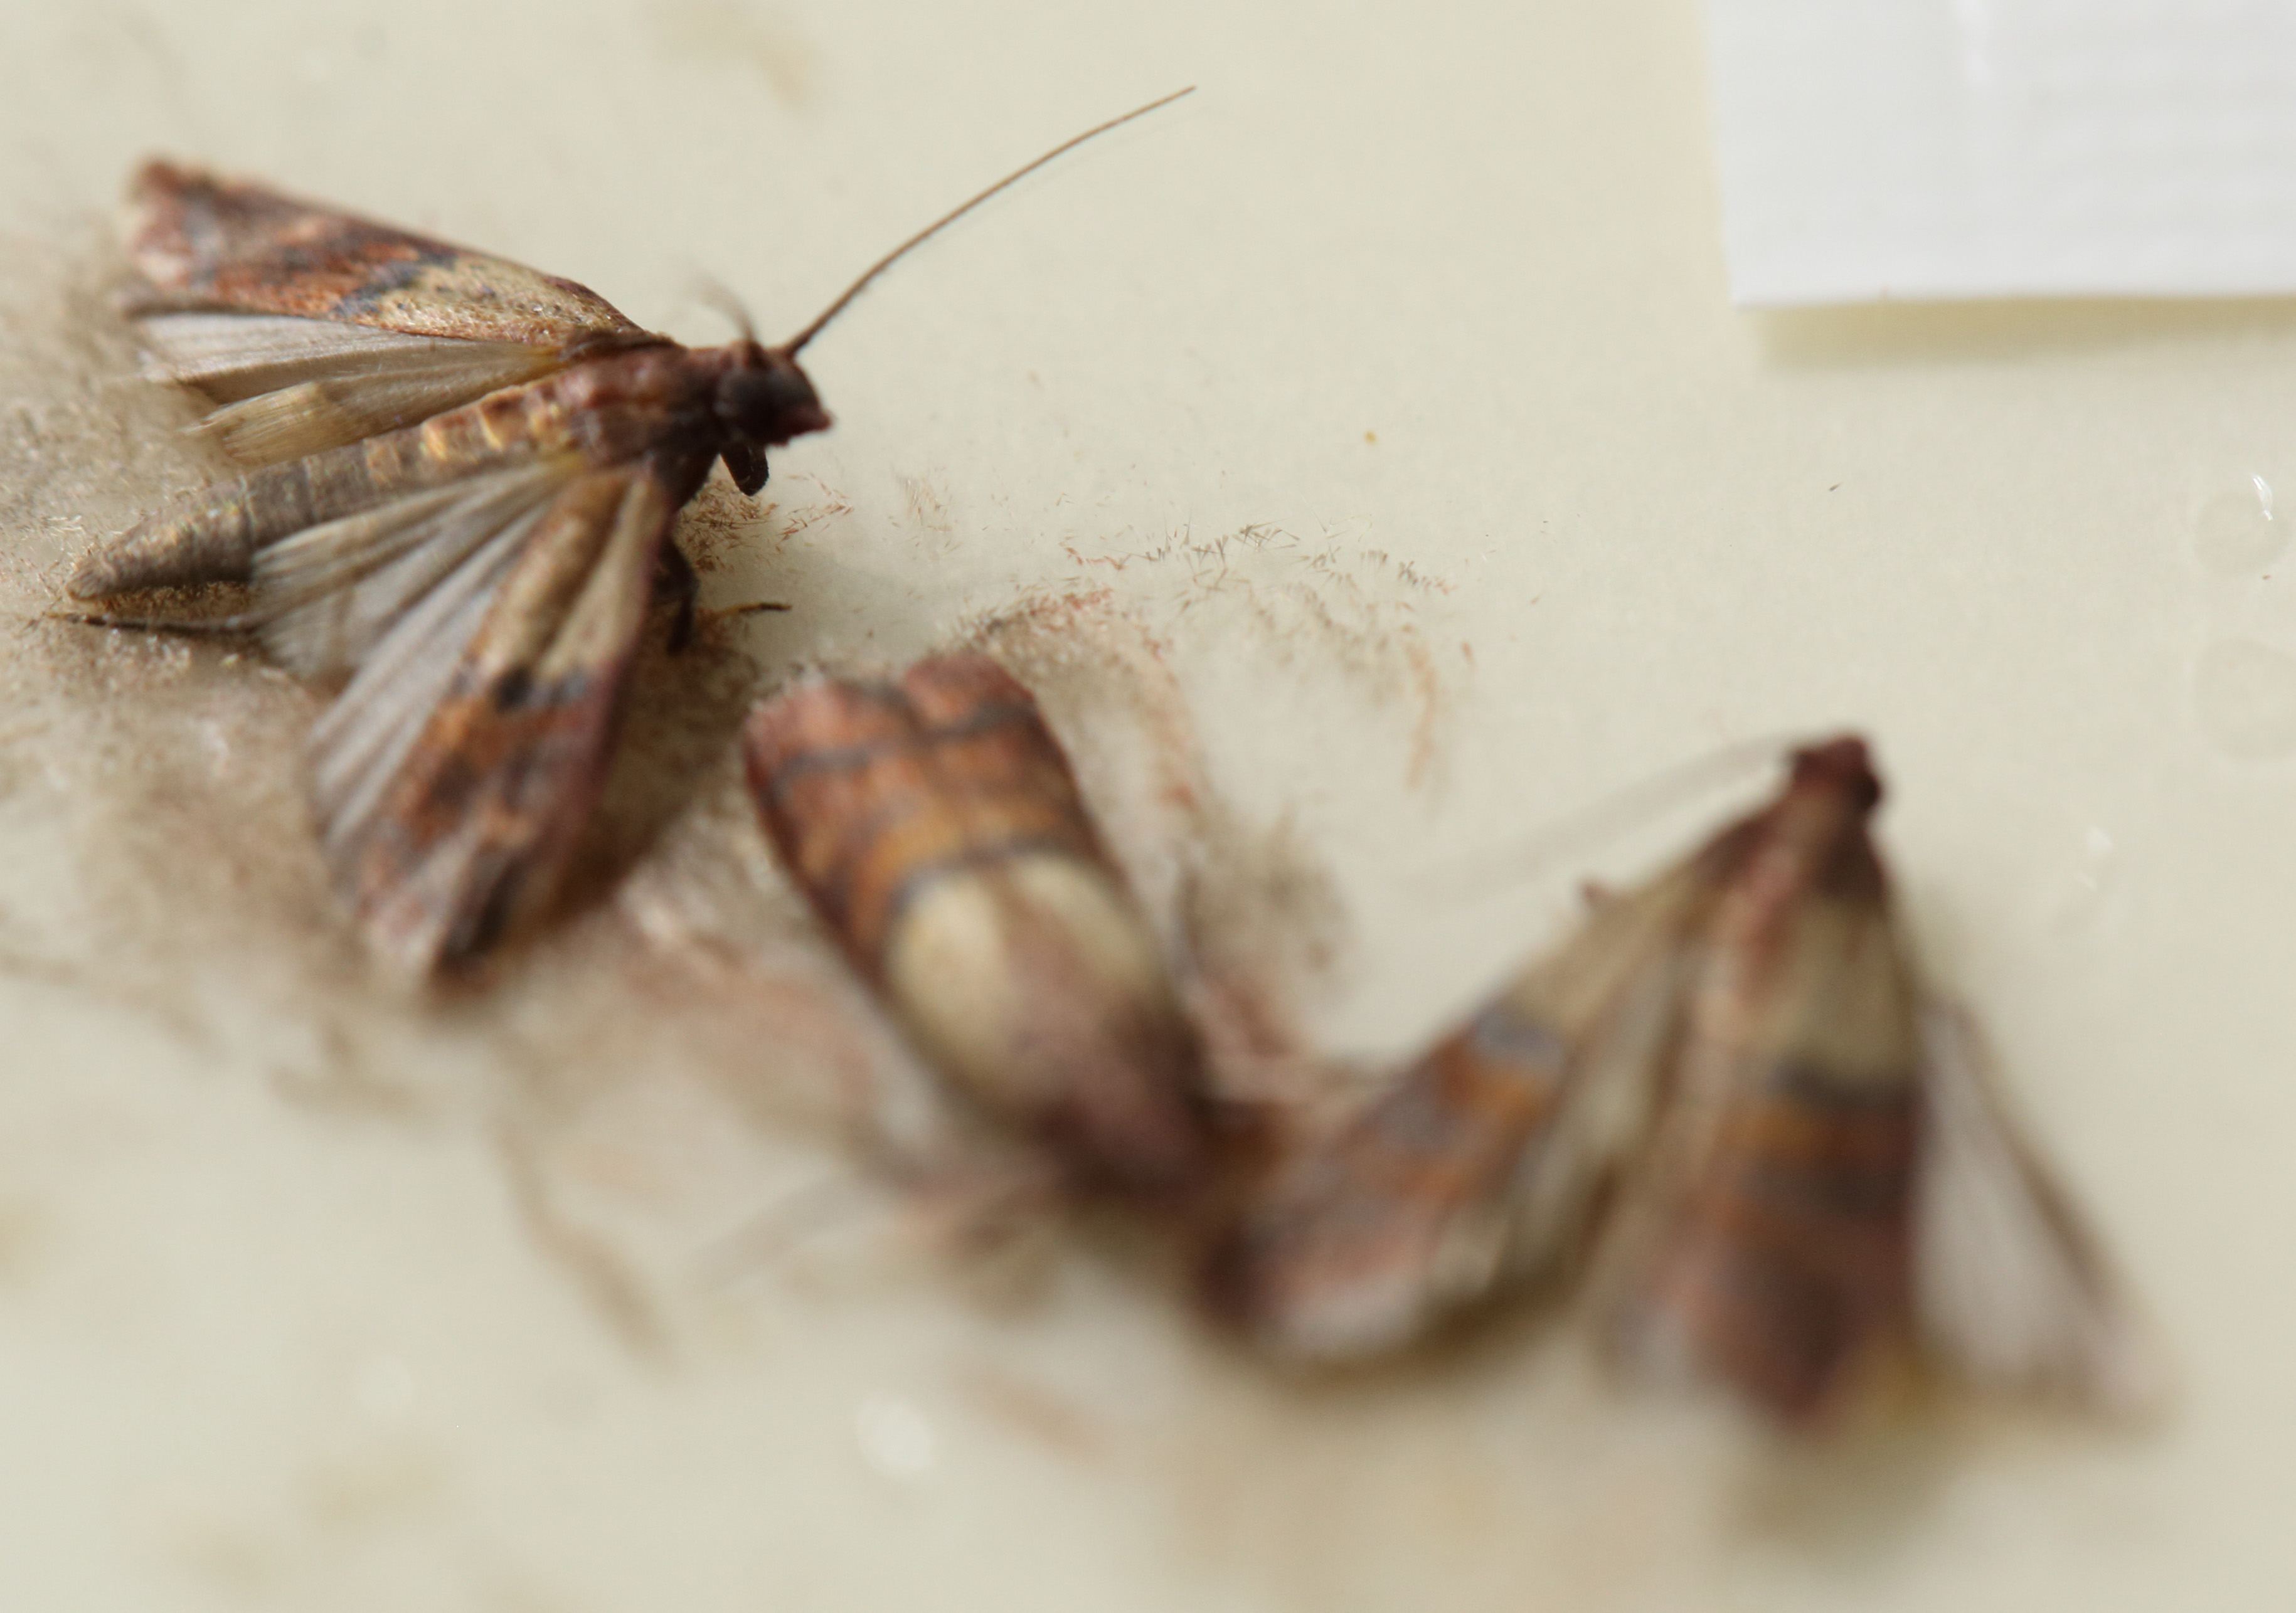 http://www.sindark.com/NonBlog/pantry-moths/adult1.JPG